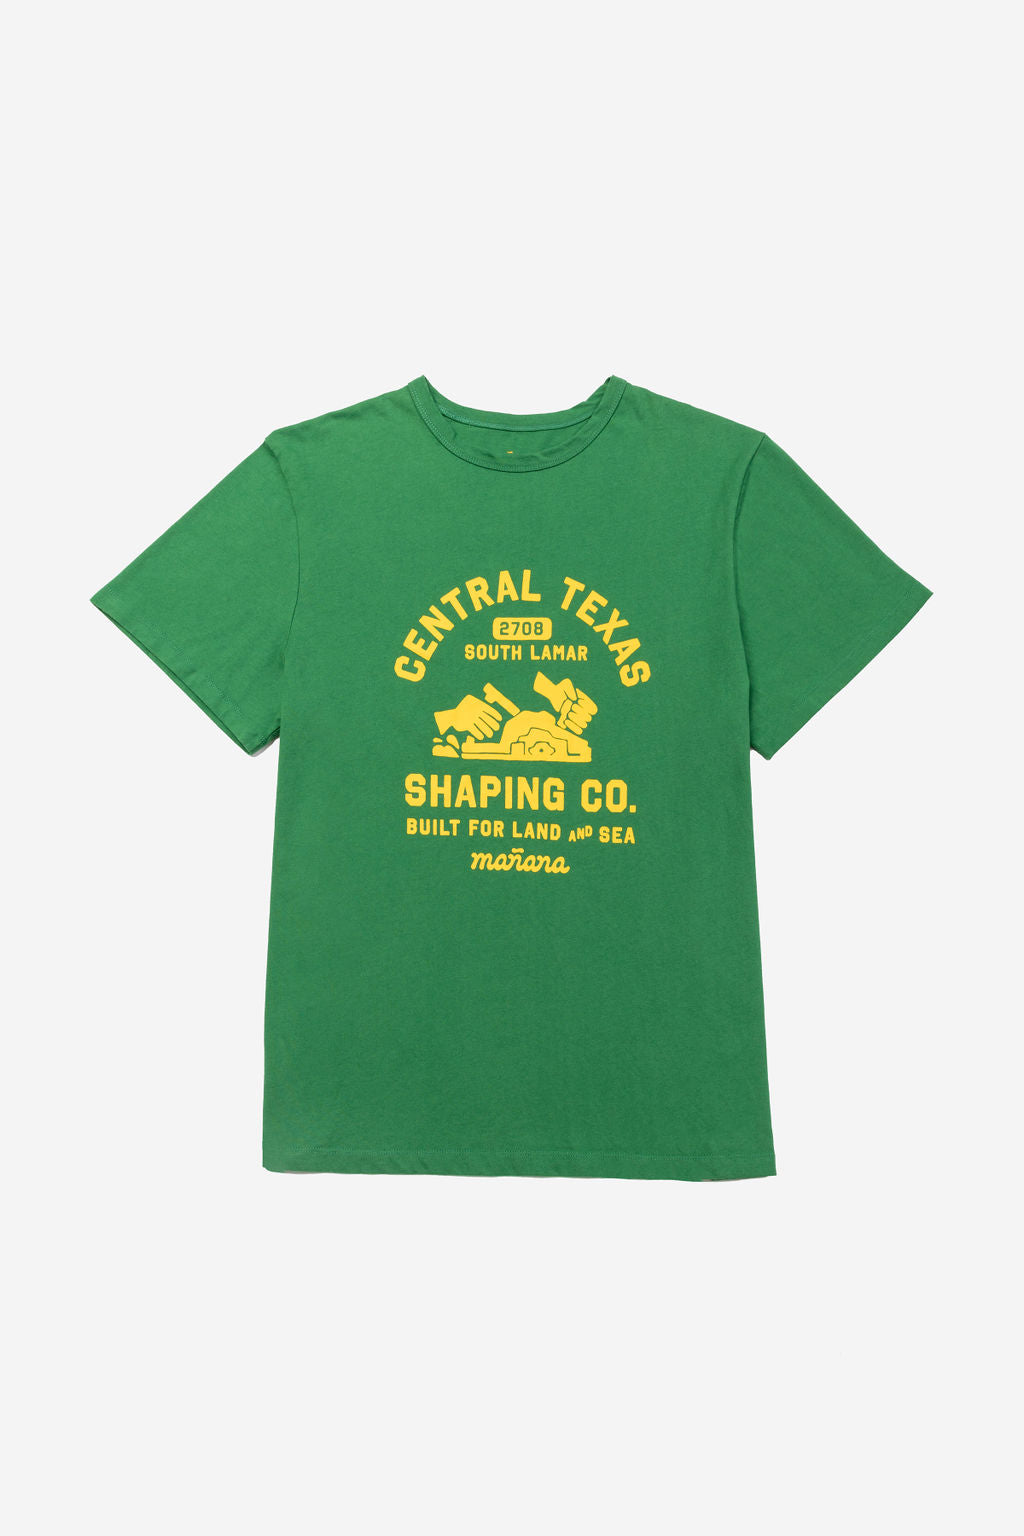 Green Workshop Tee Shirt having Manana branding